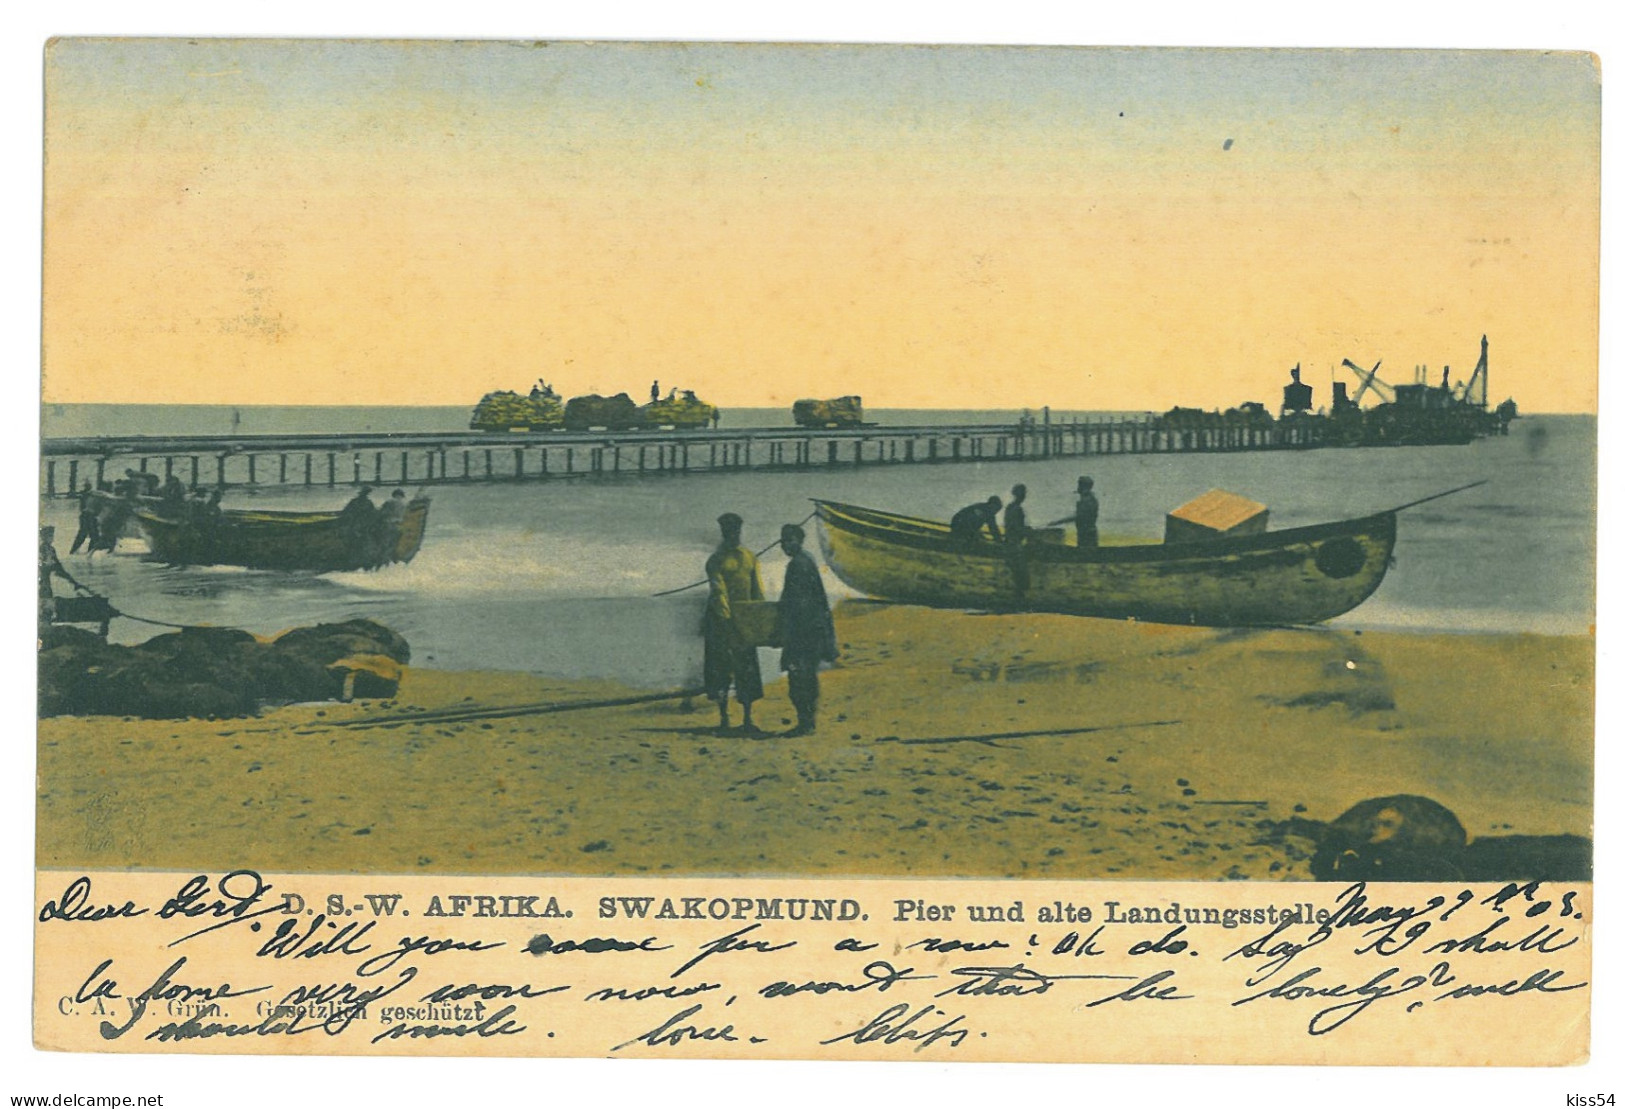 NAM 8 - 23800 SWAKOPMUND, Wharf, D.S.W. Afrika, Namibia - Old Postcard - Used - 1903 - Namibië